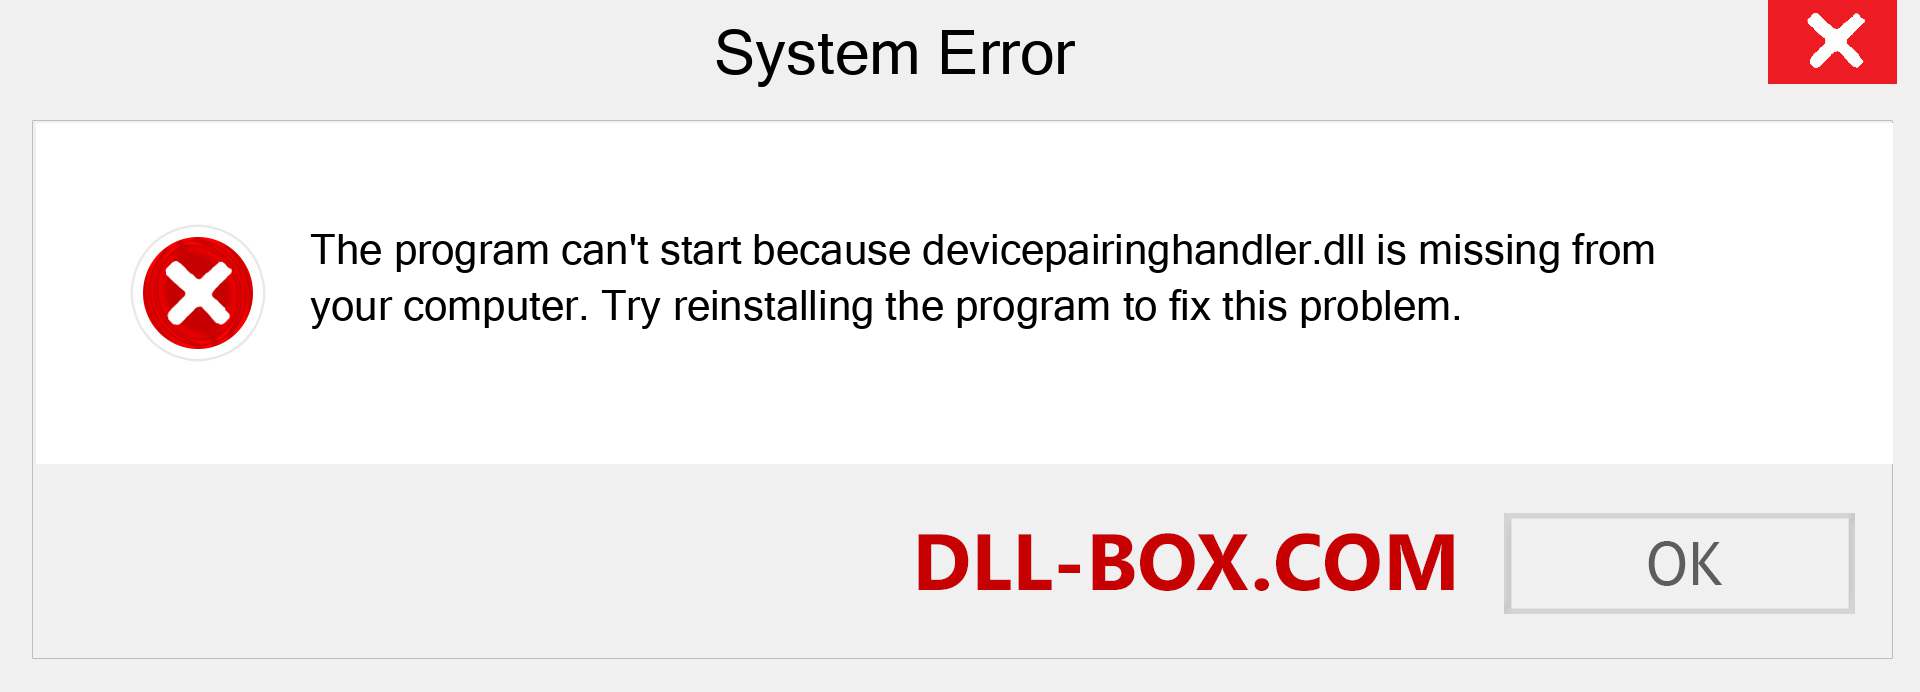  devicepairinghandler.dll file is missing?. Download for Windows 7, 8, 10 - Fix  devicepairinghandler dll Missing Error on Windows, photos, images